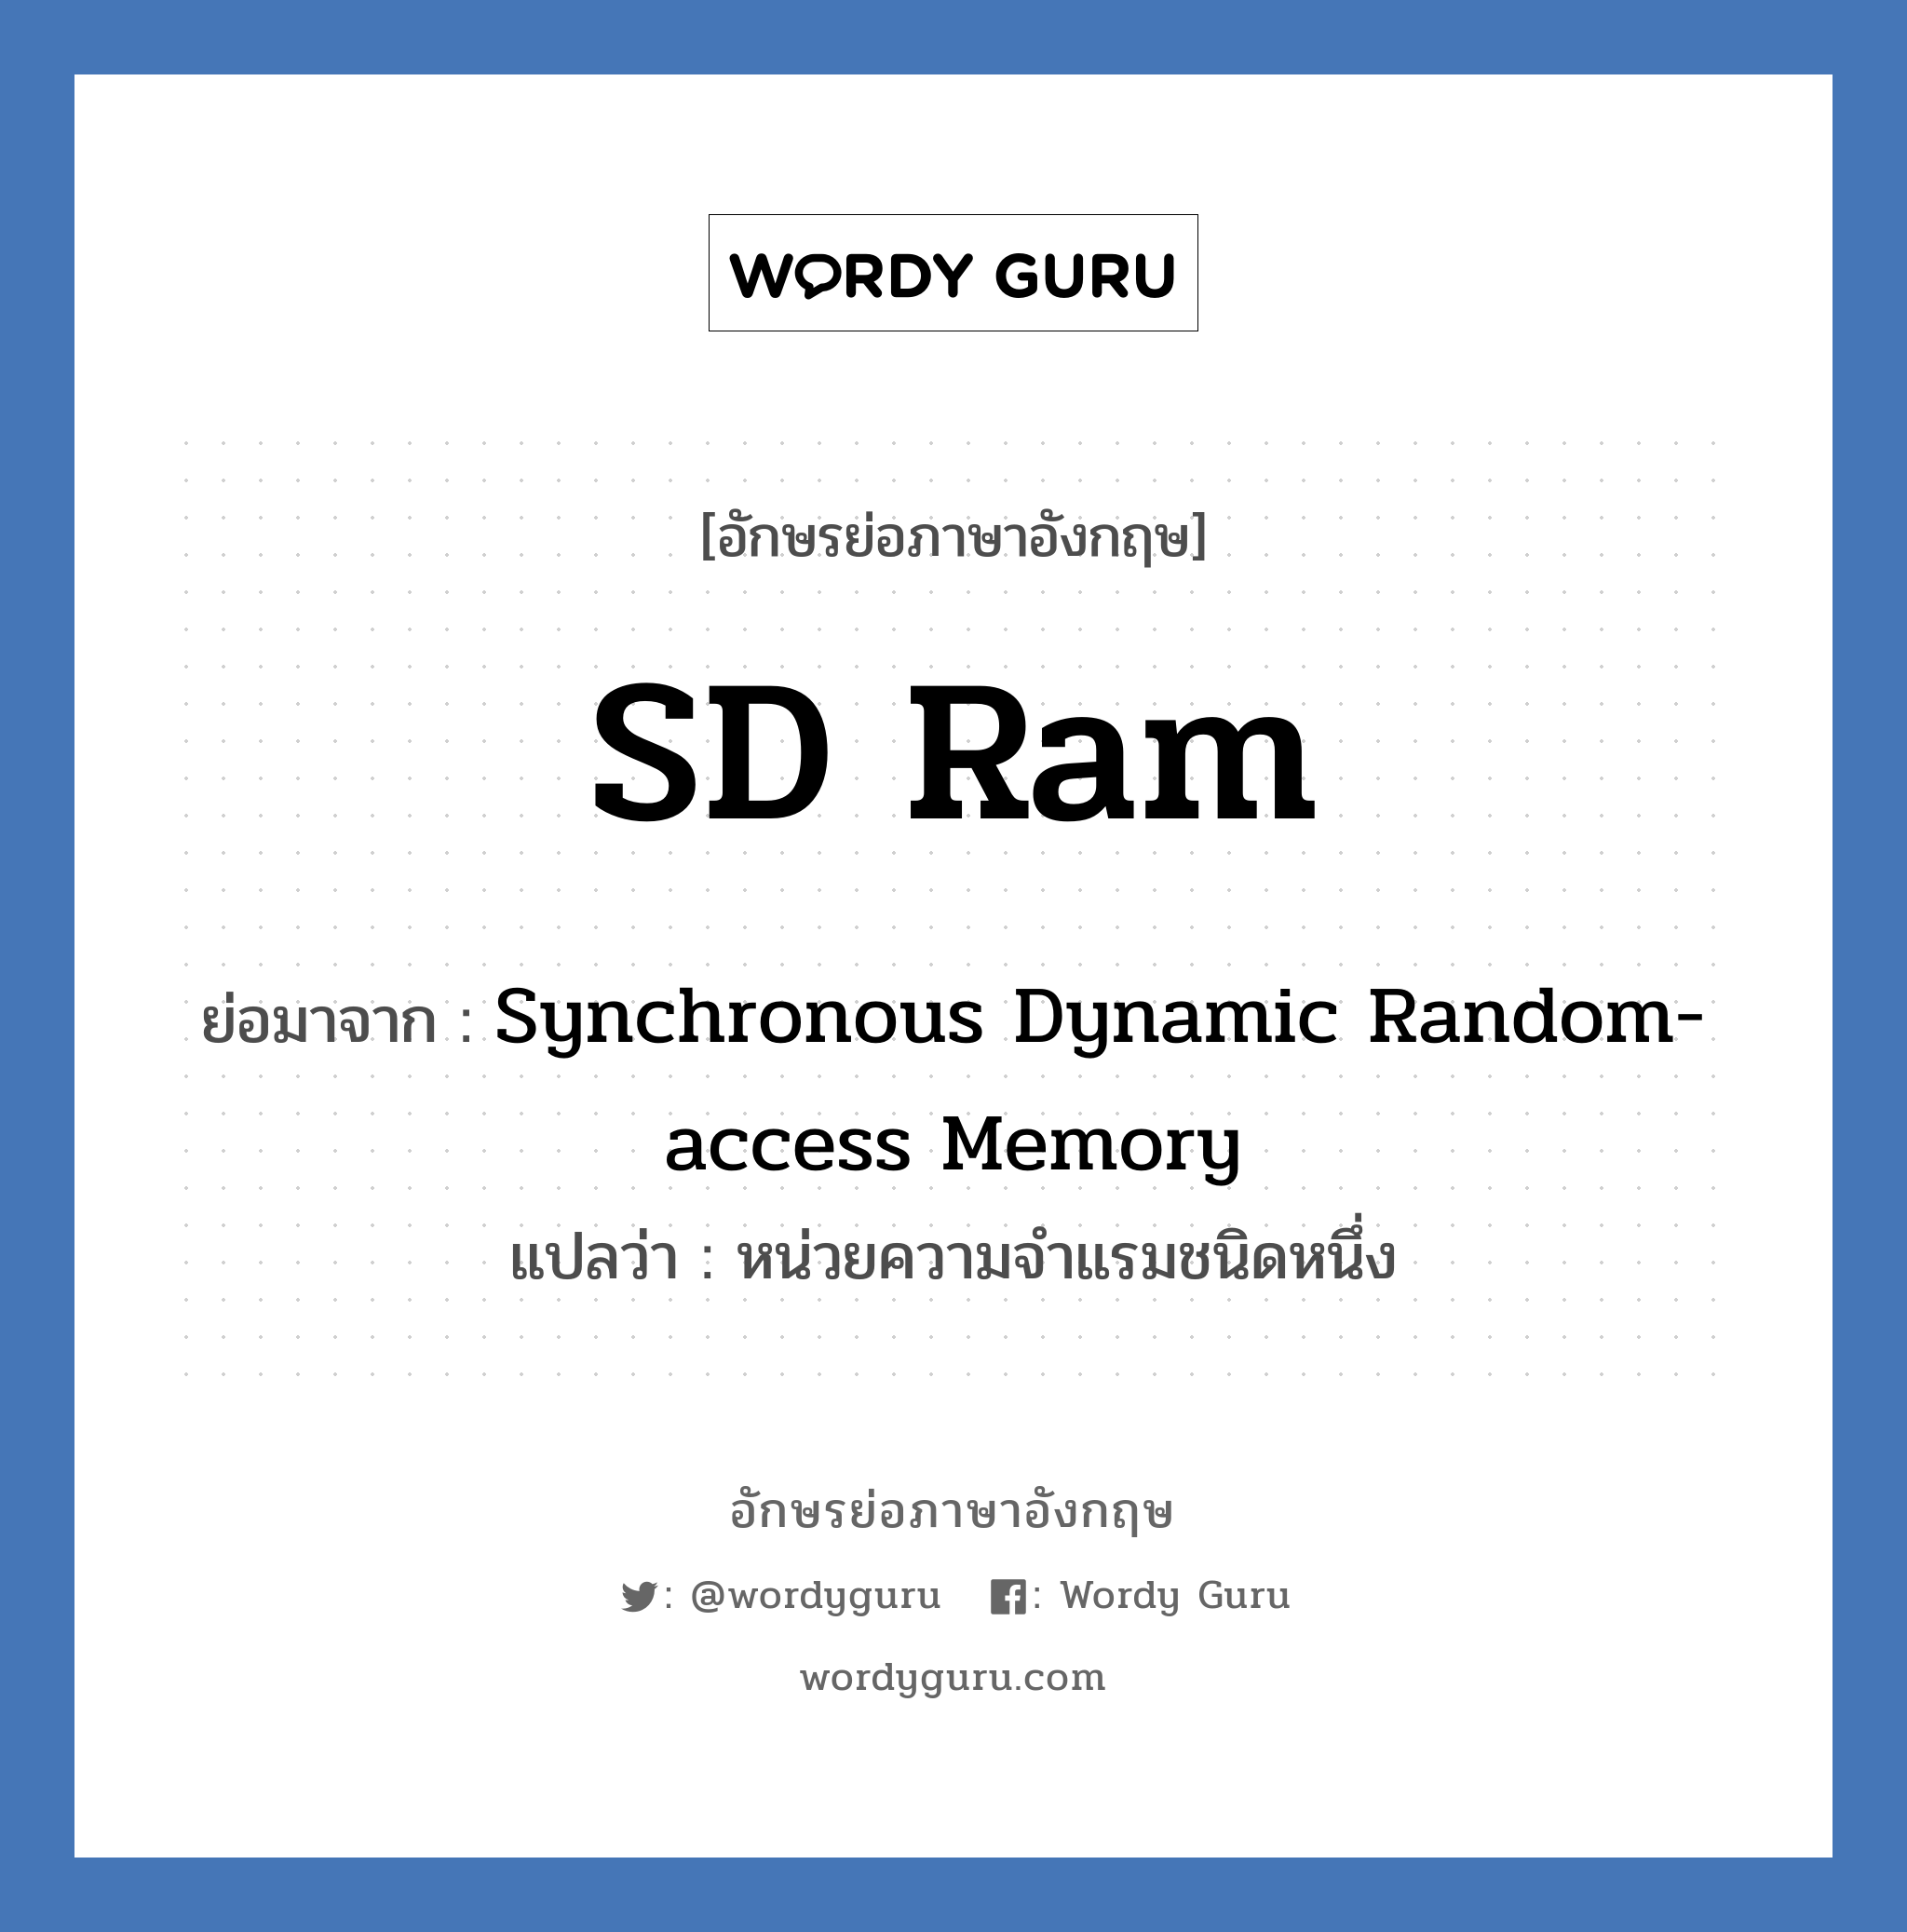 Synchronous Dynamic Random-access Memory คำย่อคือ? แปลว่า?, อักษรย่อภาษาอังกฤษ Synchronous Dynamic Random-access Memory ย่อมาจาก SD Ram แปลว่า หน่วยความจำแรมชนิดหนึ่ง